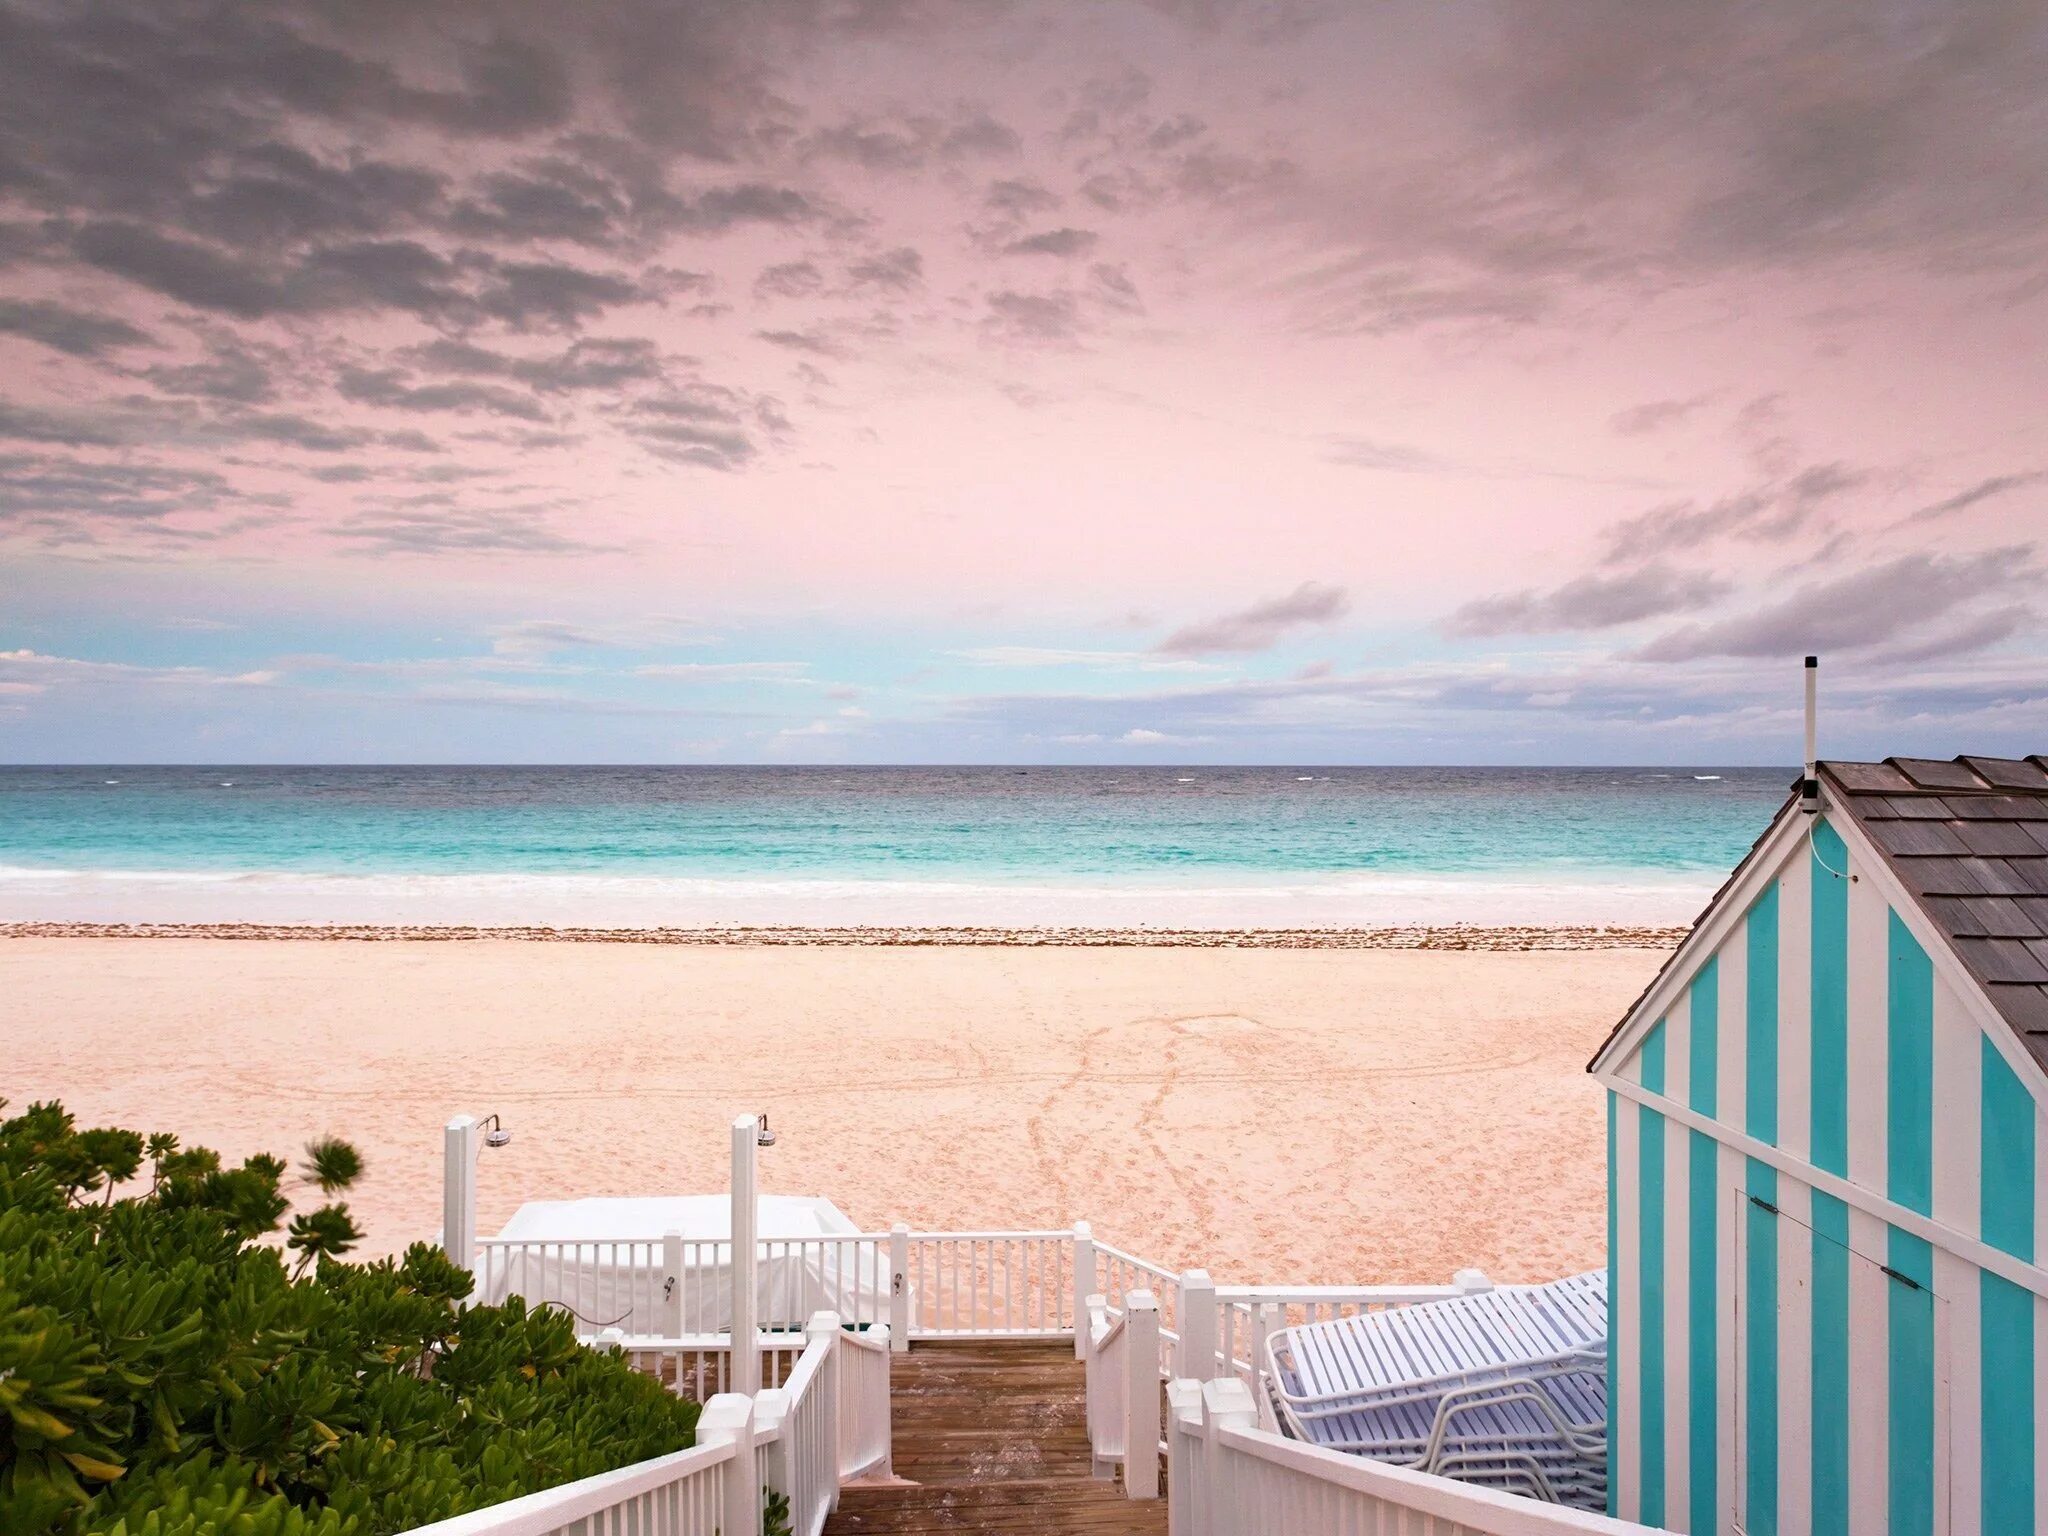 Harbor island. Пинк-Сэндс-Бич, Багамские острова. Pink Sands Beach Багамские острова. Пляж Пинк-Сэнд-Бич, Харбор, Багамские острова. Розовый пляж на Харбор-Айленд Багамы.